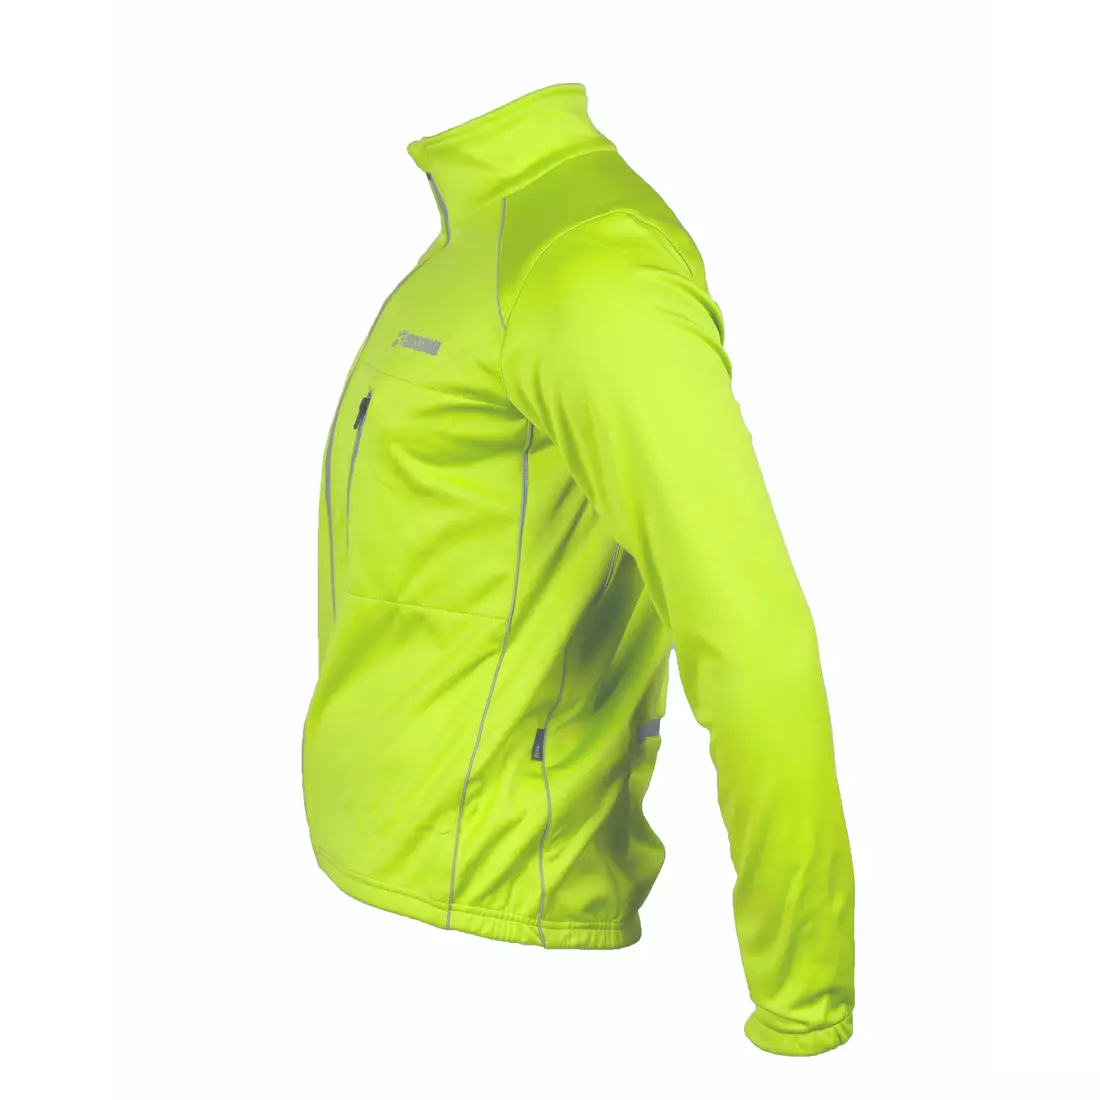 CROSSROAD ROCKFORD winter cycling jacket, softshell, fluorine